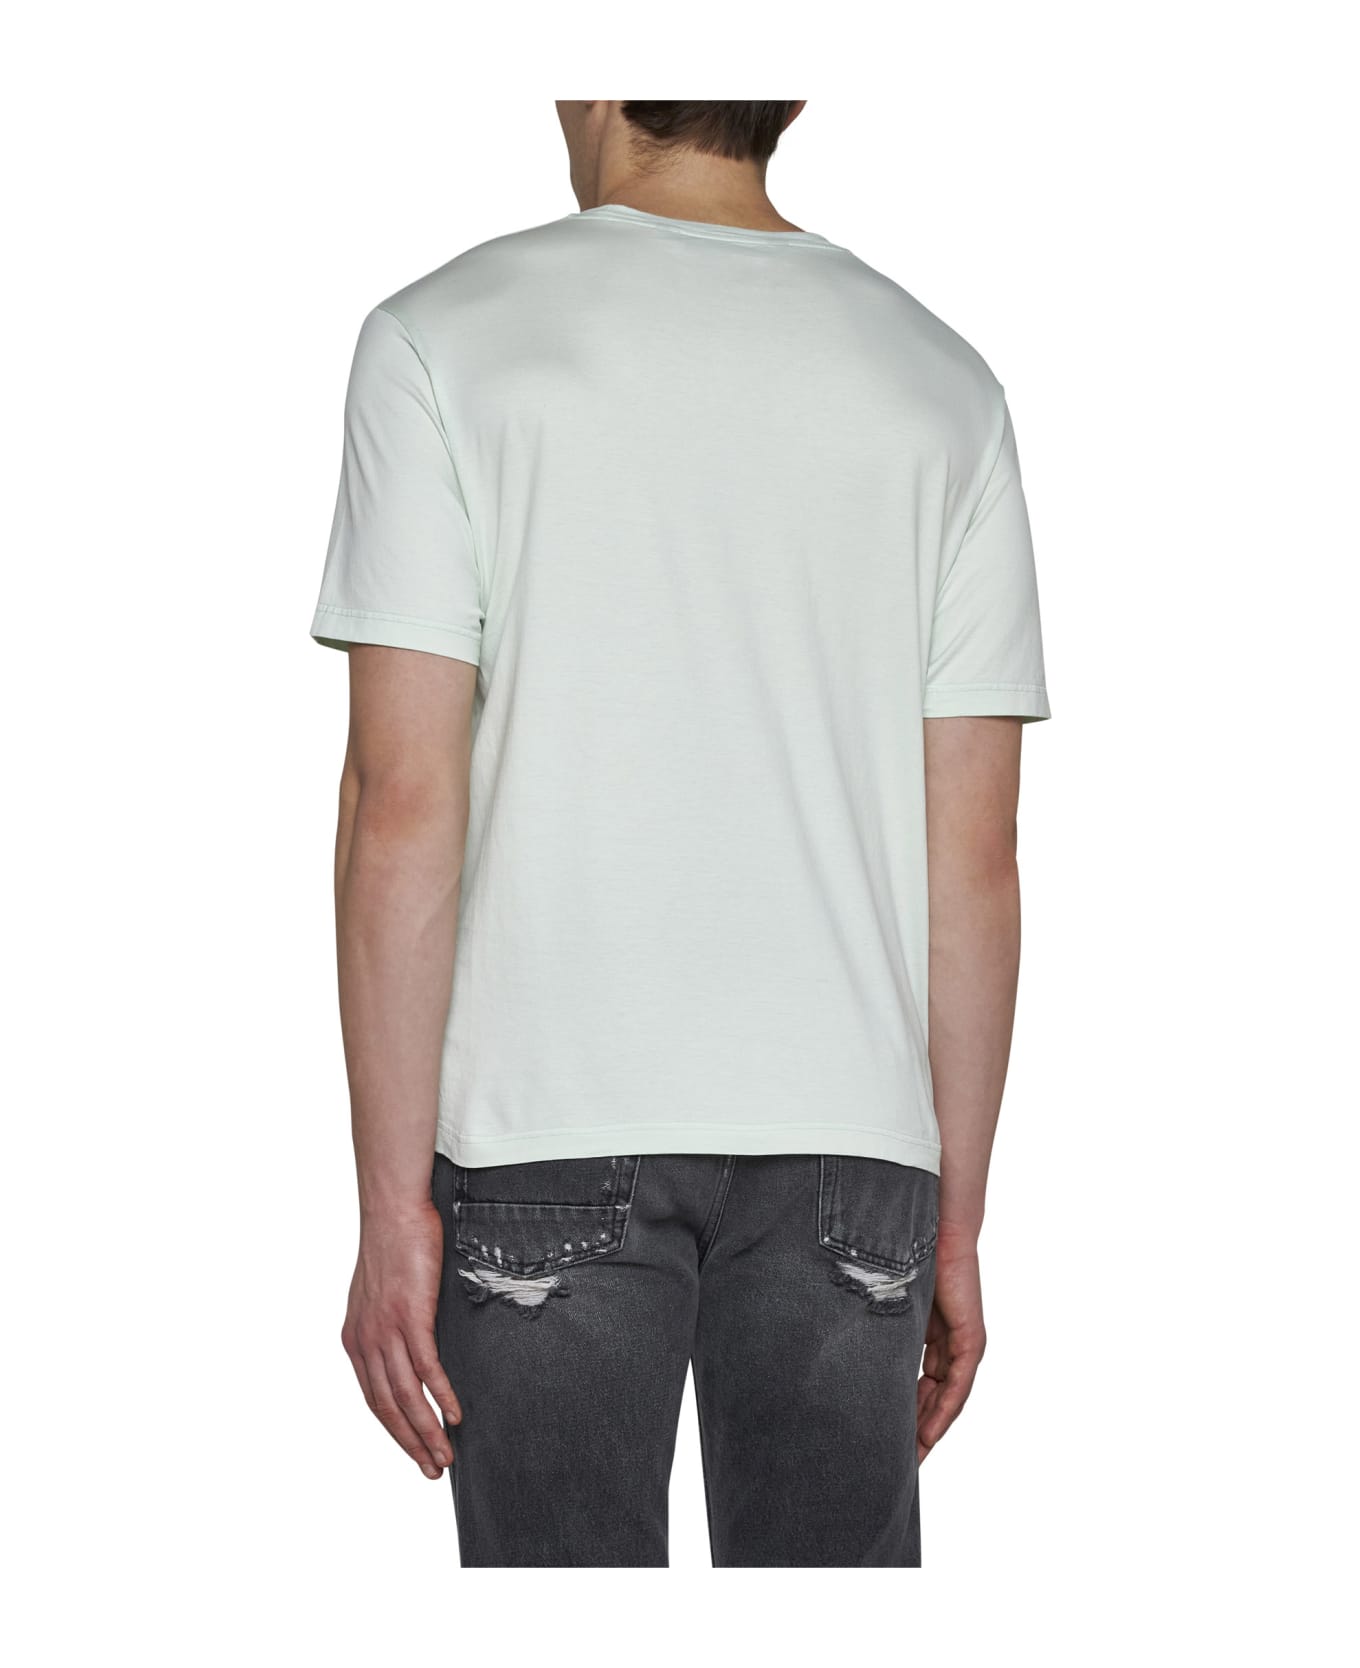 Palm Angels Logo Printed Crewneck T-shirt - Mint off white シャツ